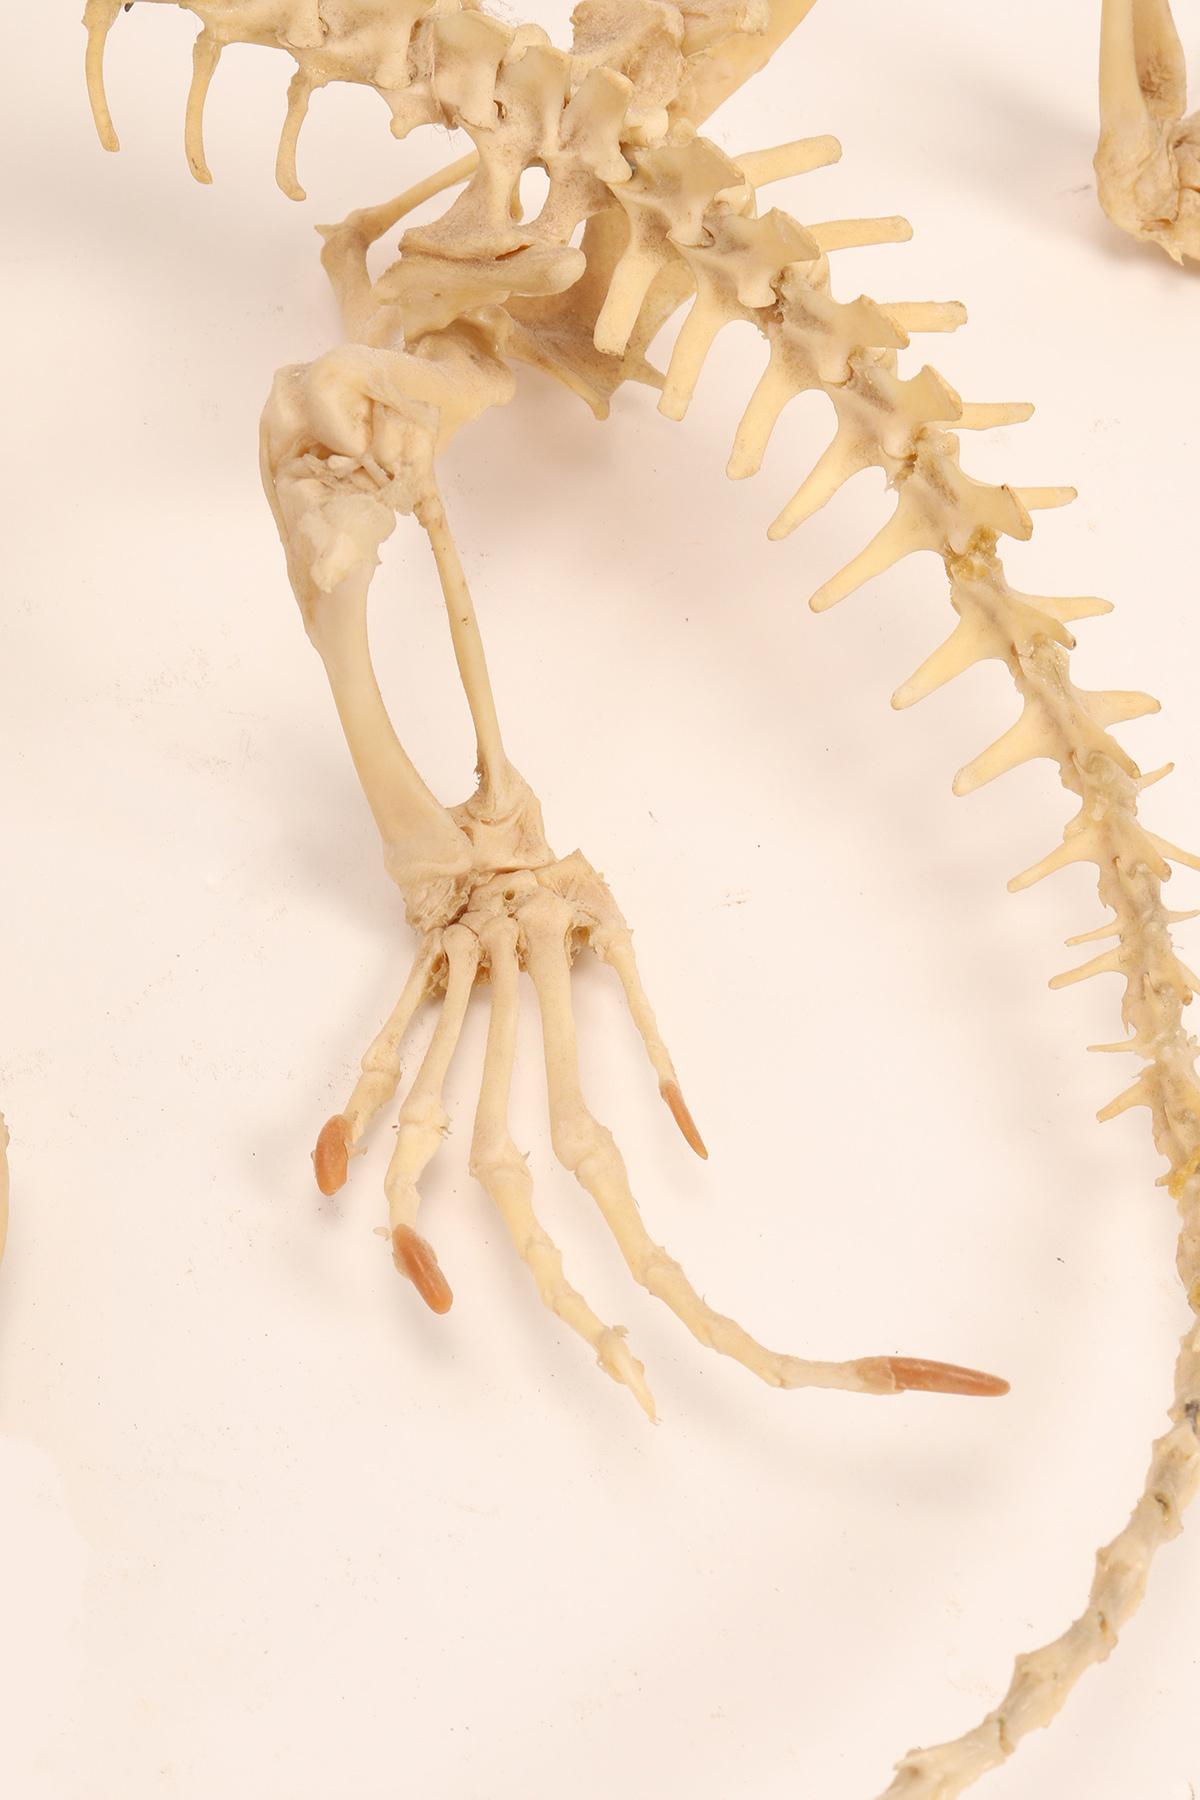 iguana skeleton anatomy